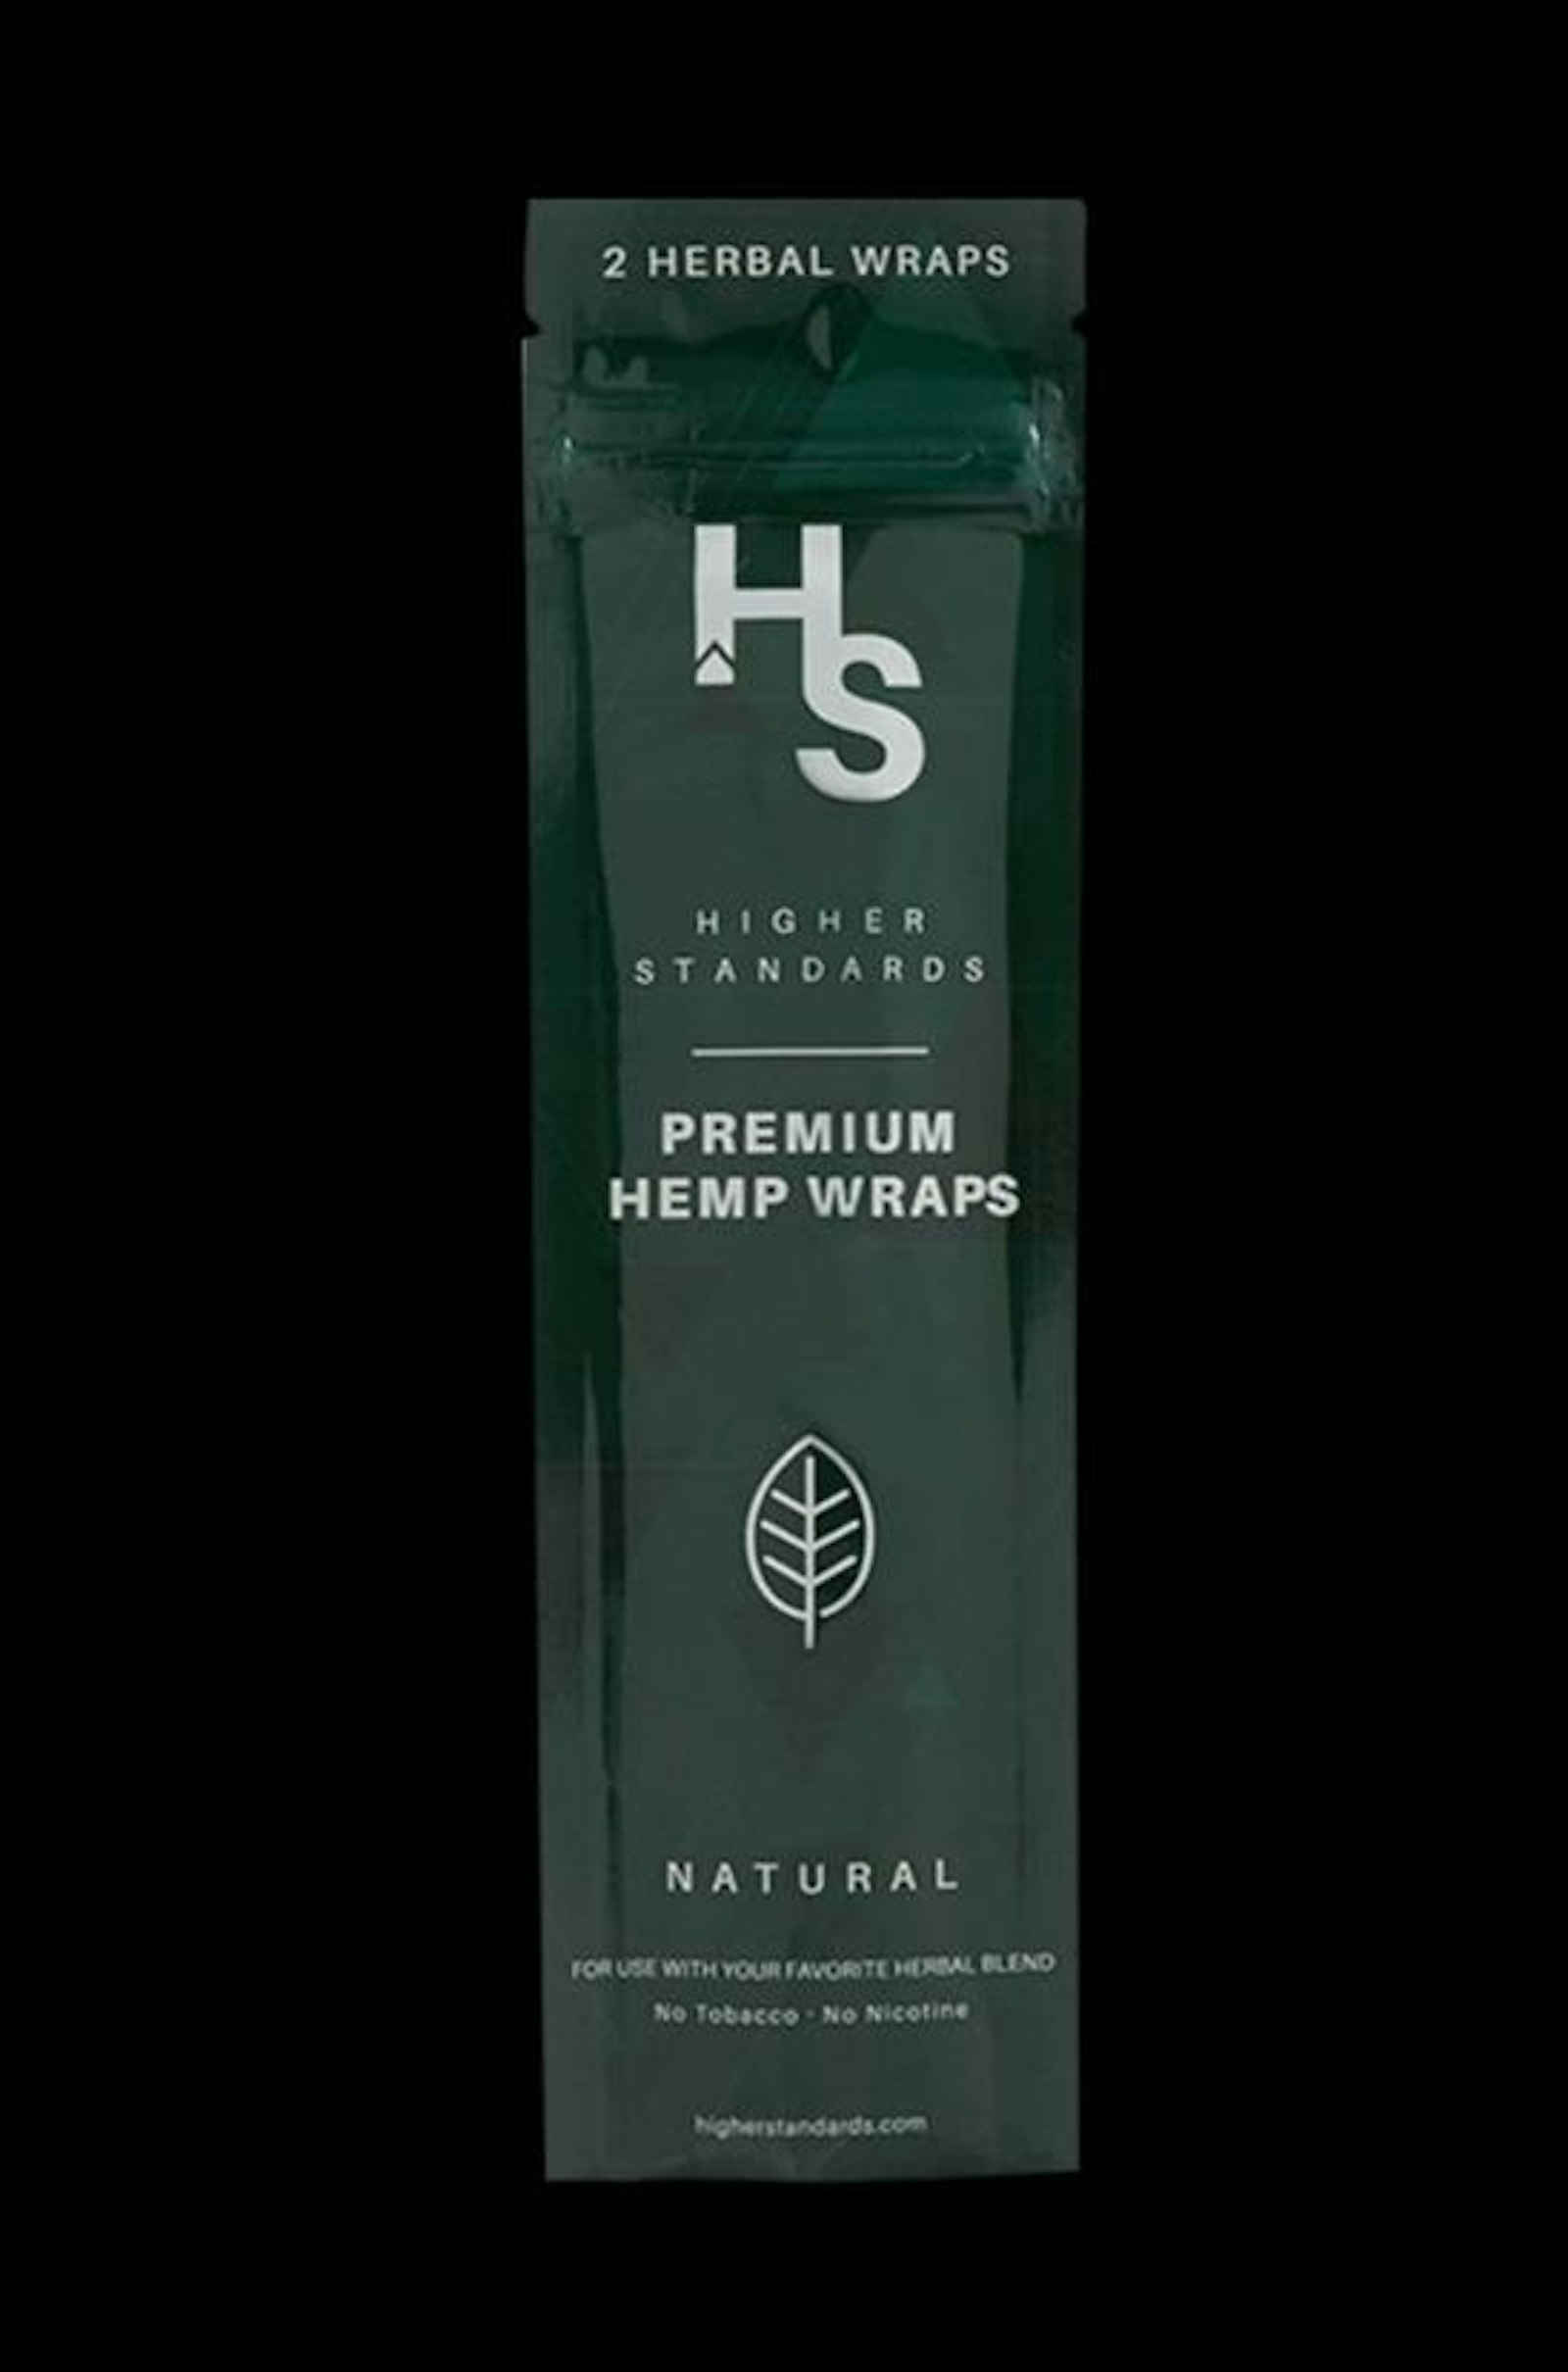 Higher Standards Premium Hemp Wraps Herb